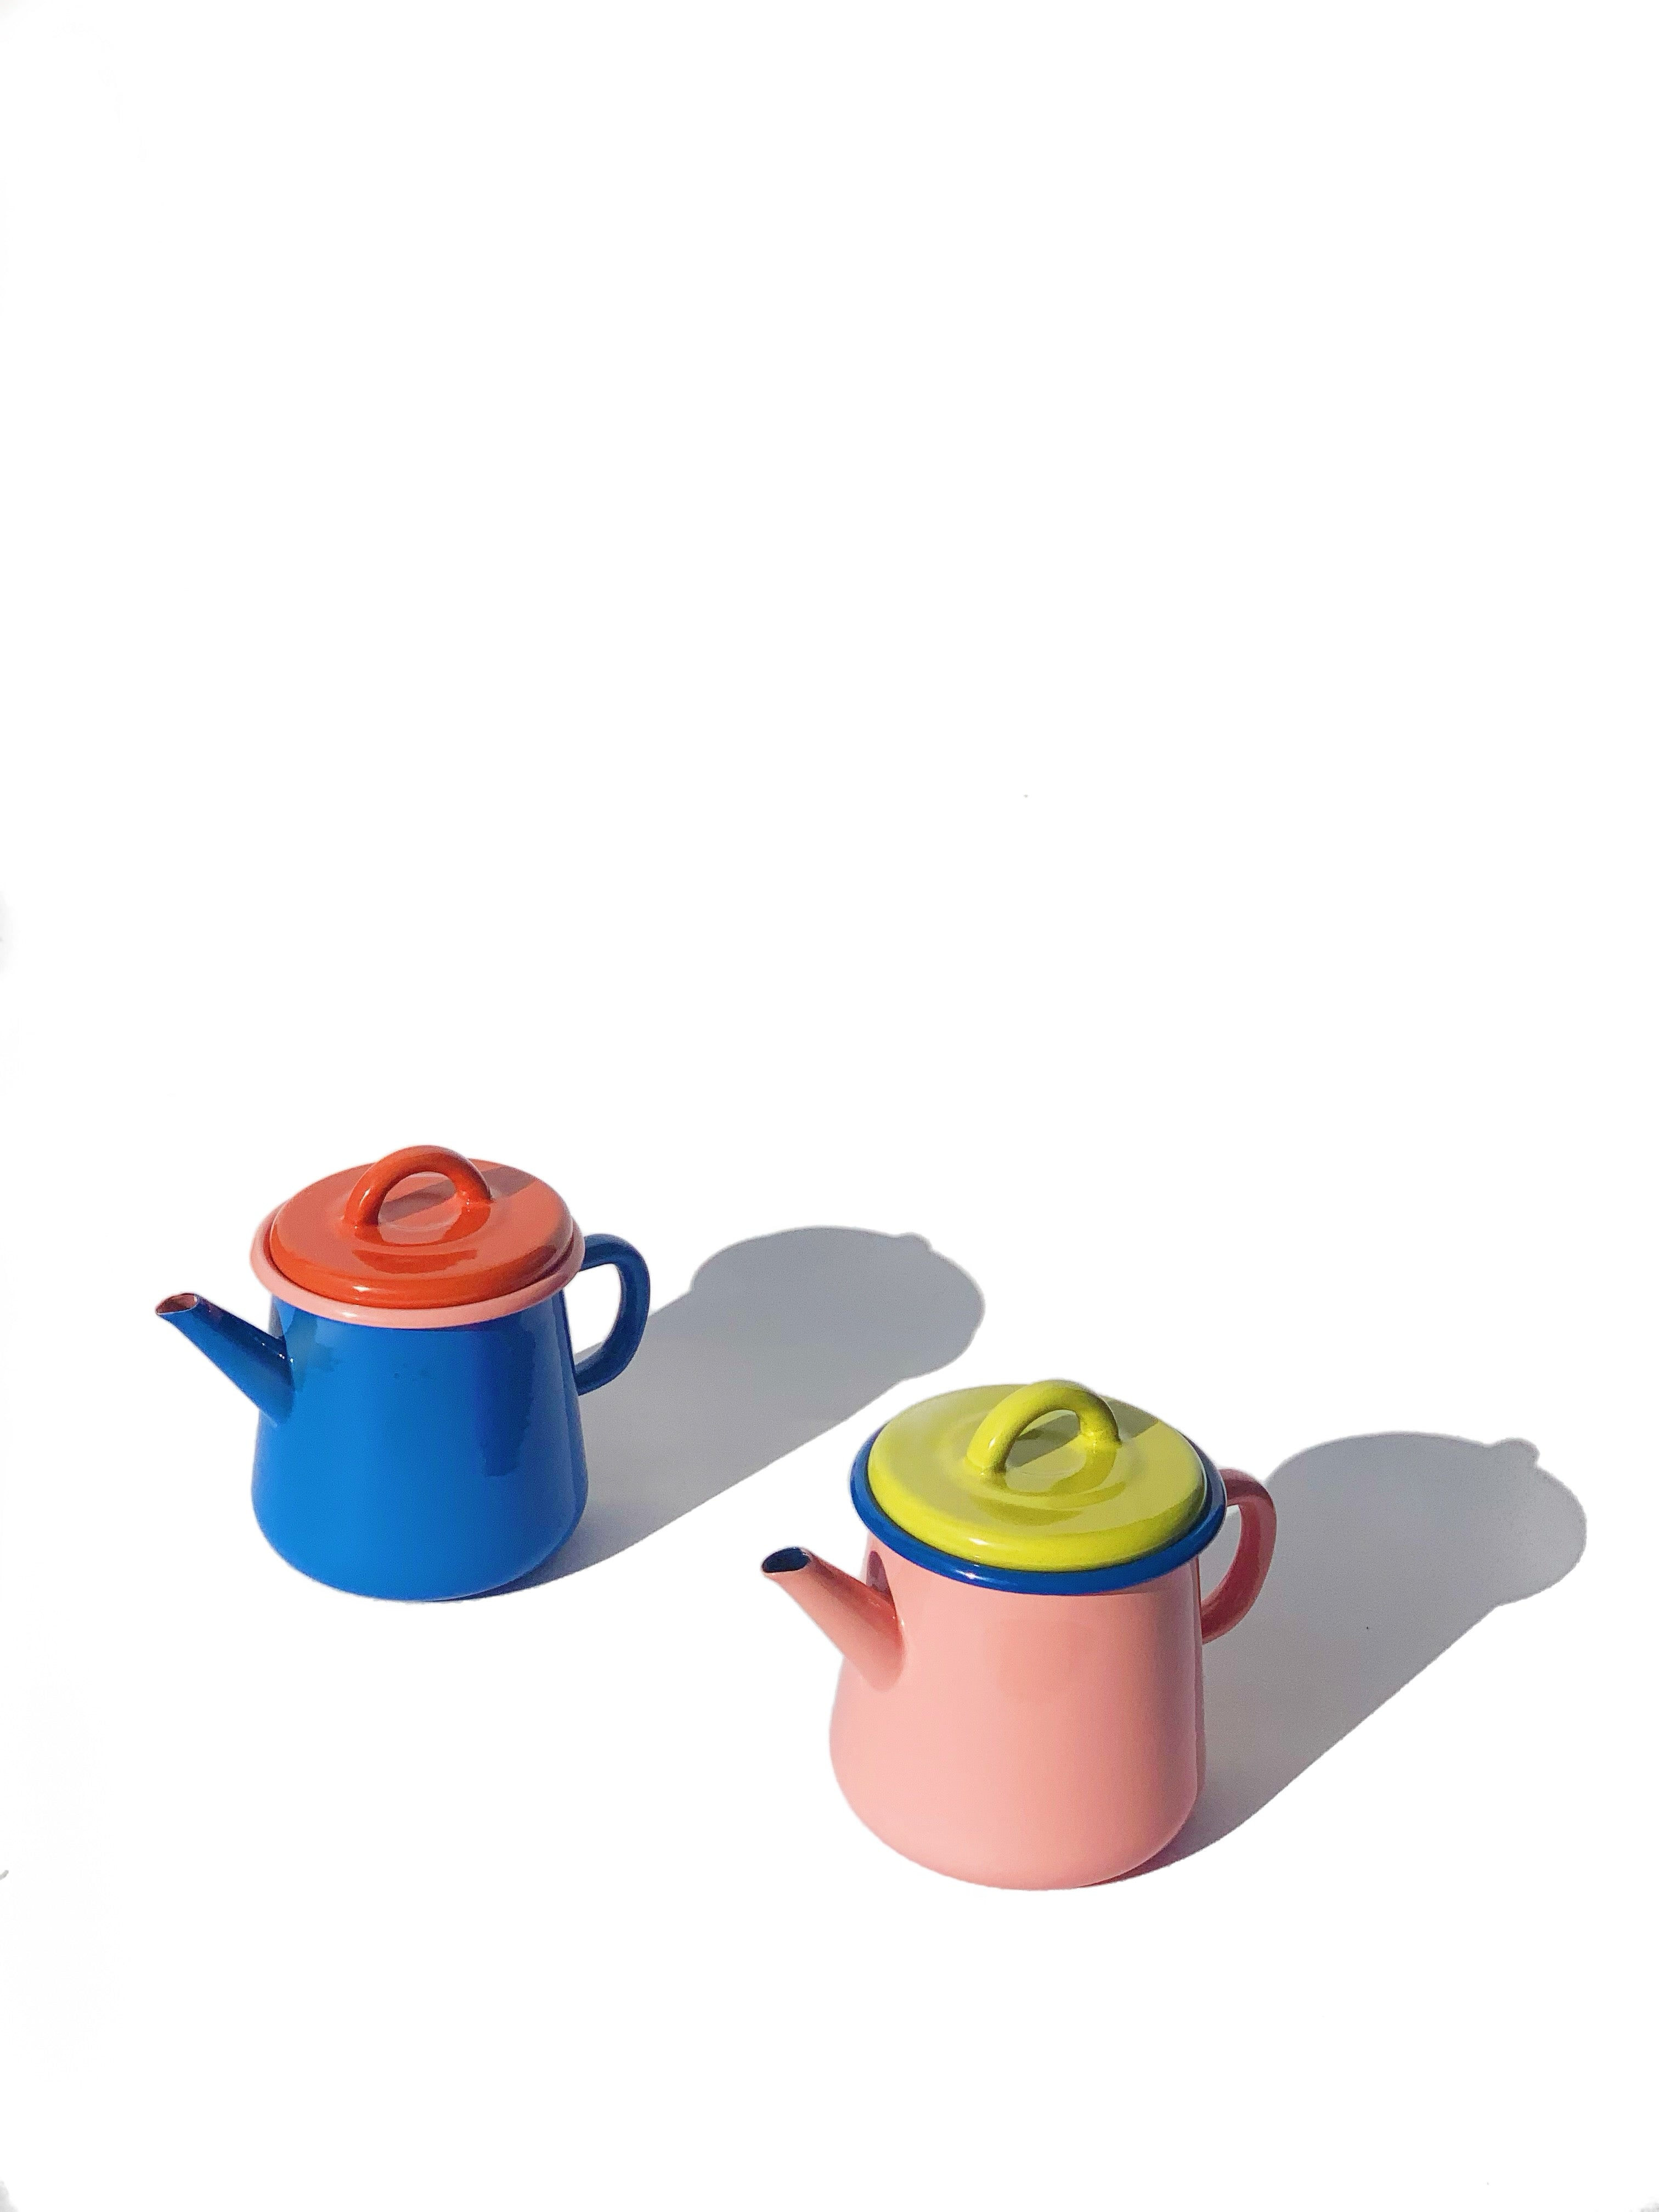 Bornn Enamelware Teapot - Electric Blue & Coral with Pink Rim